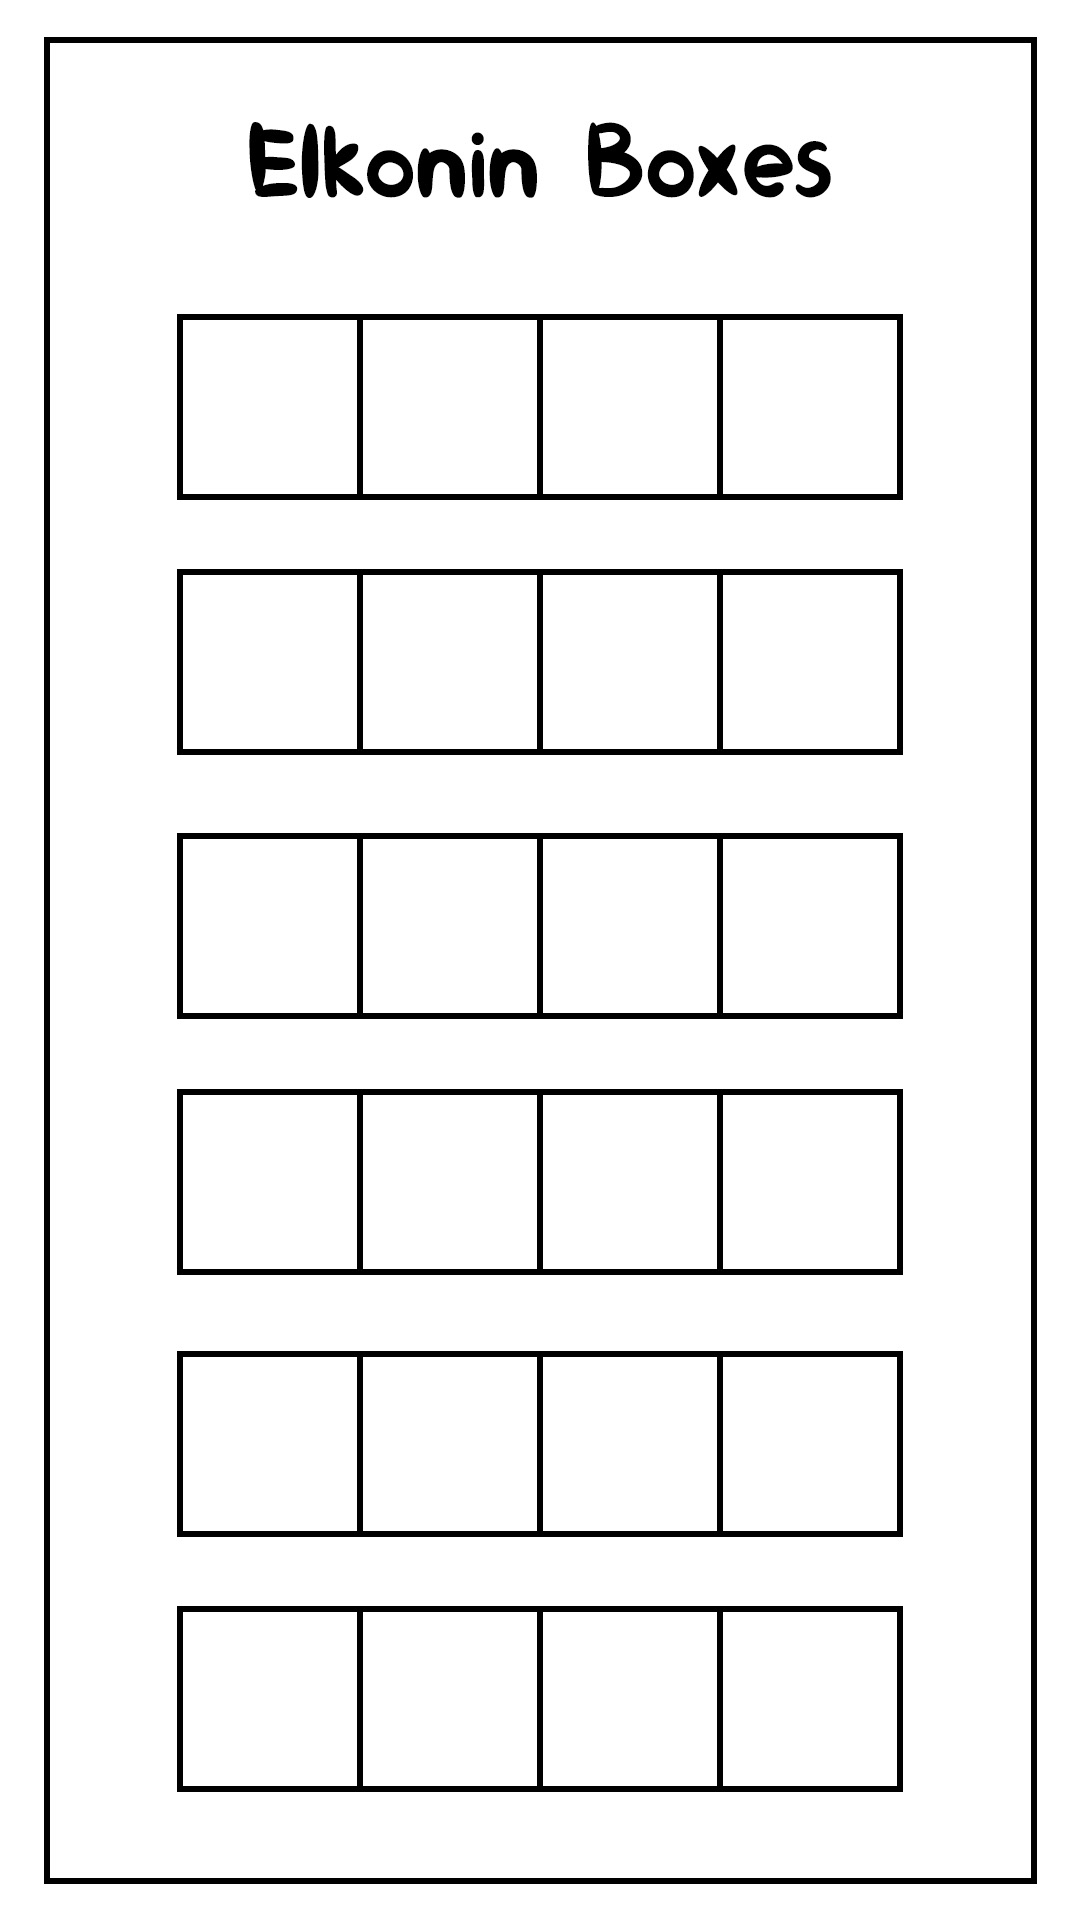 segmenting-words-worksheets-kindergarten